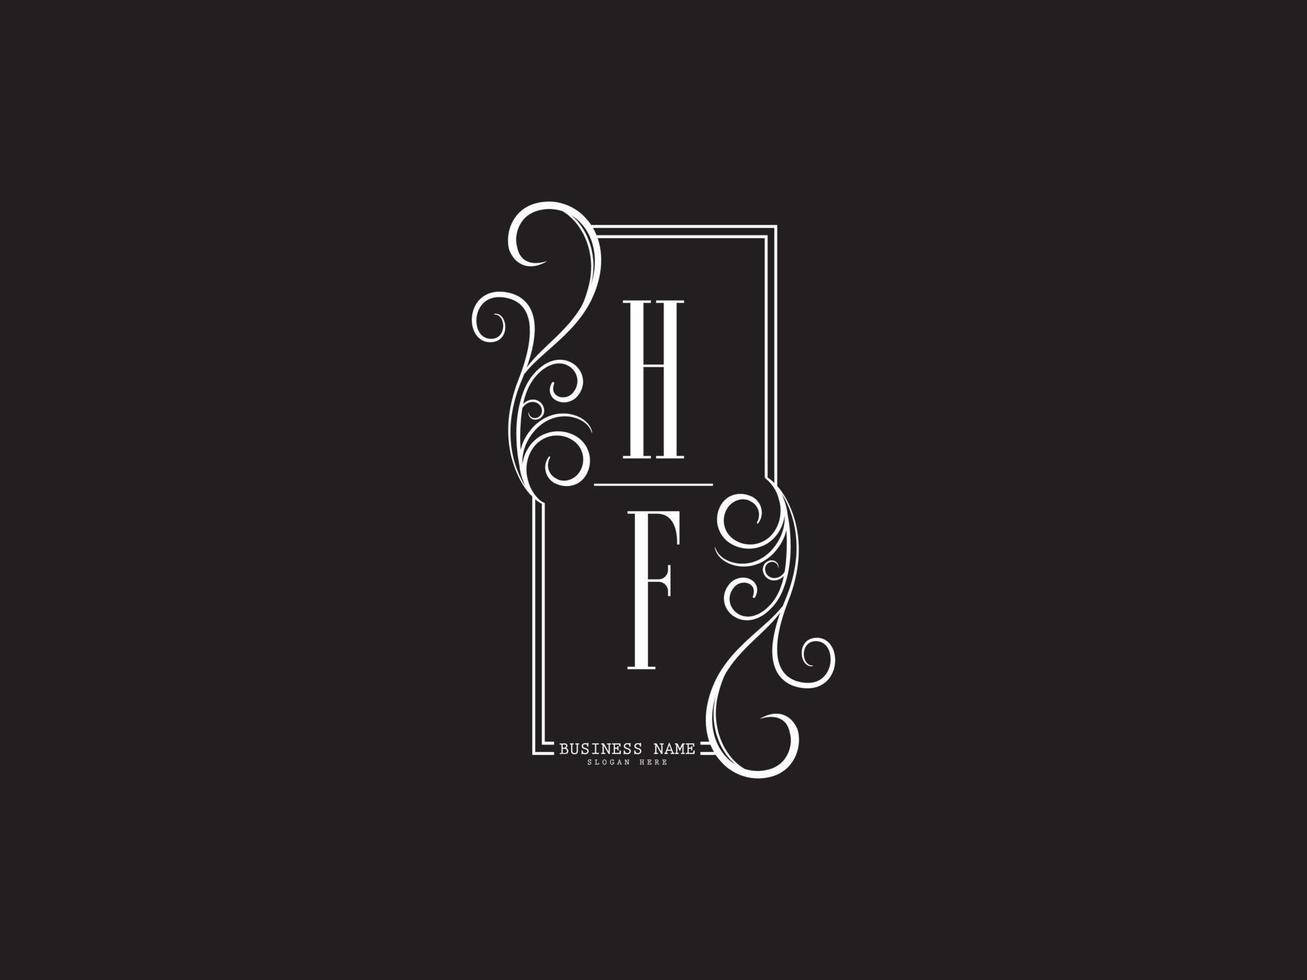 design minimalista de imagem vetorial de letra de logotipo de luxo hf fh vetor